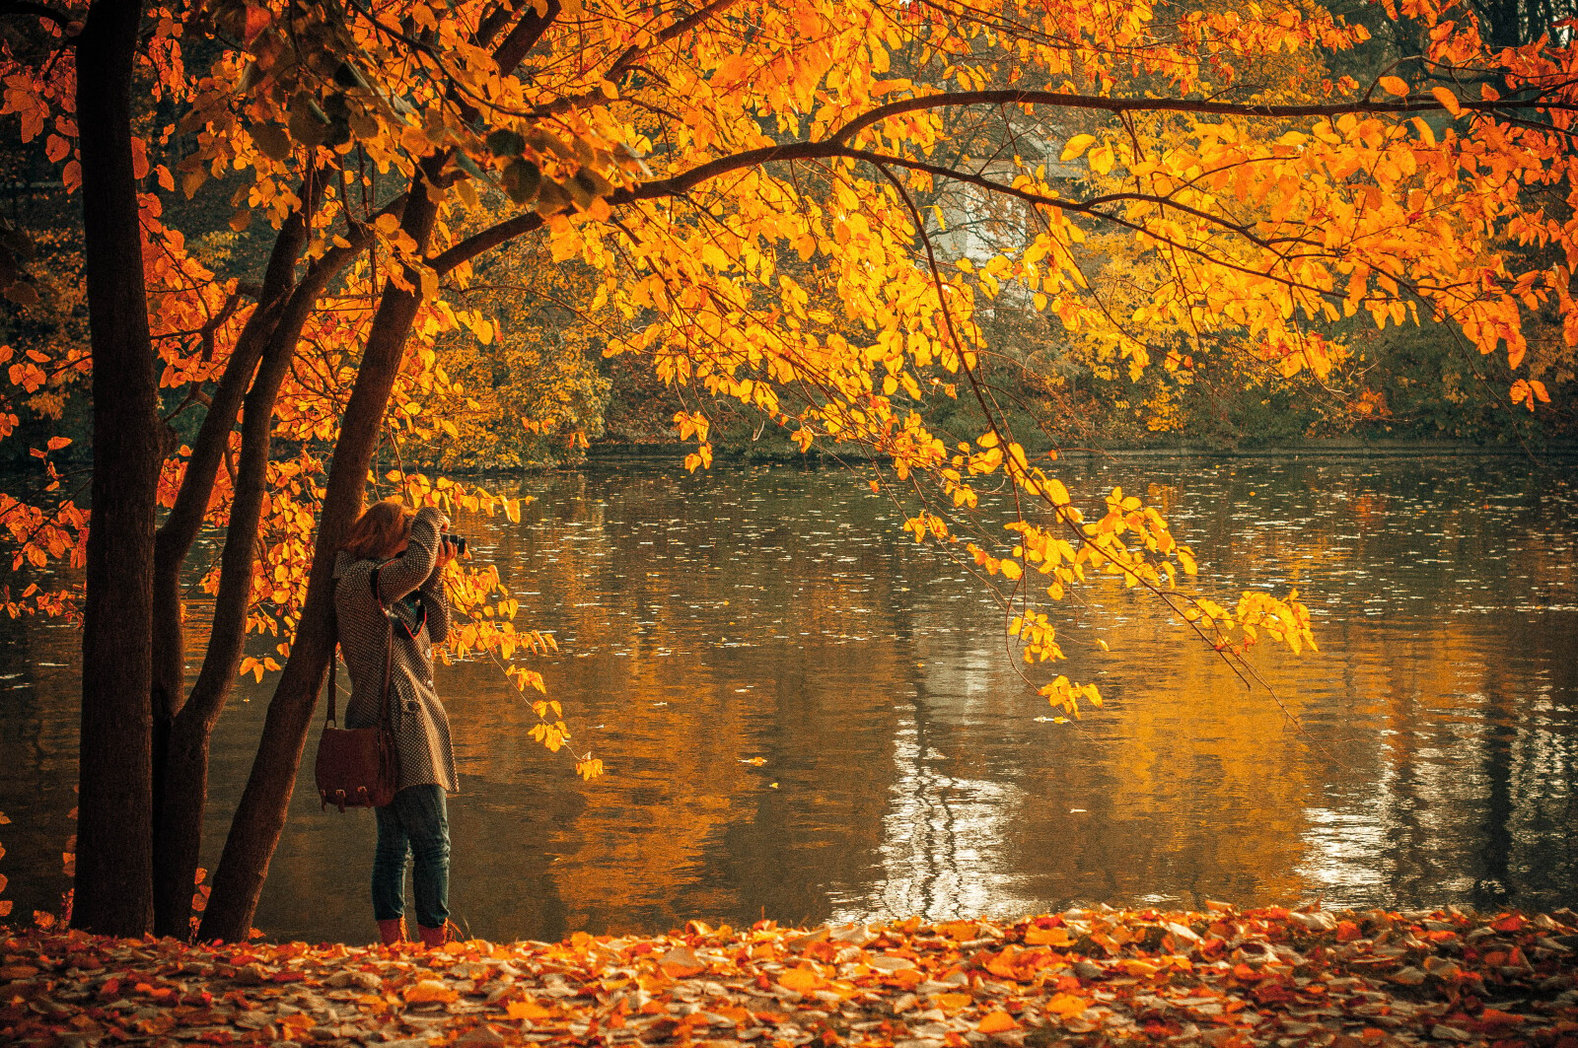 Woman Taking a Photo of Fall Scenery